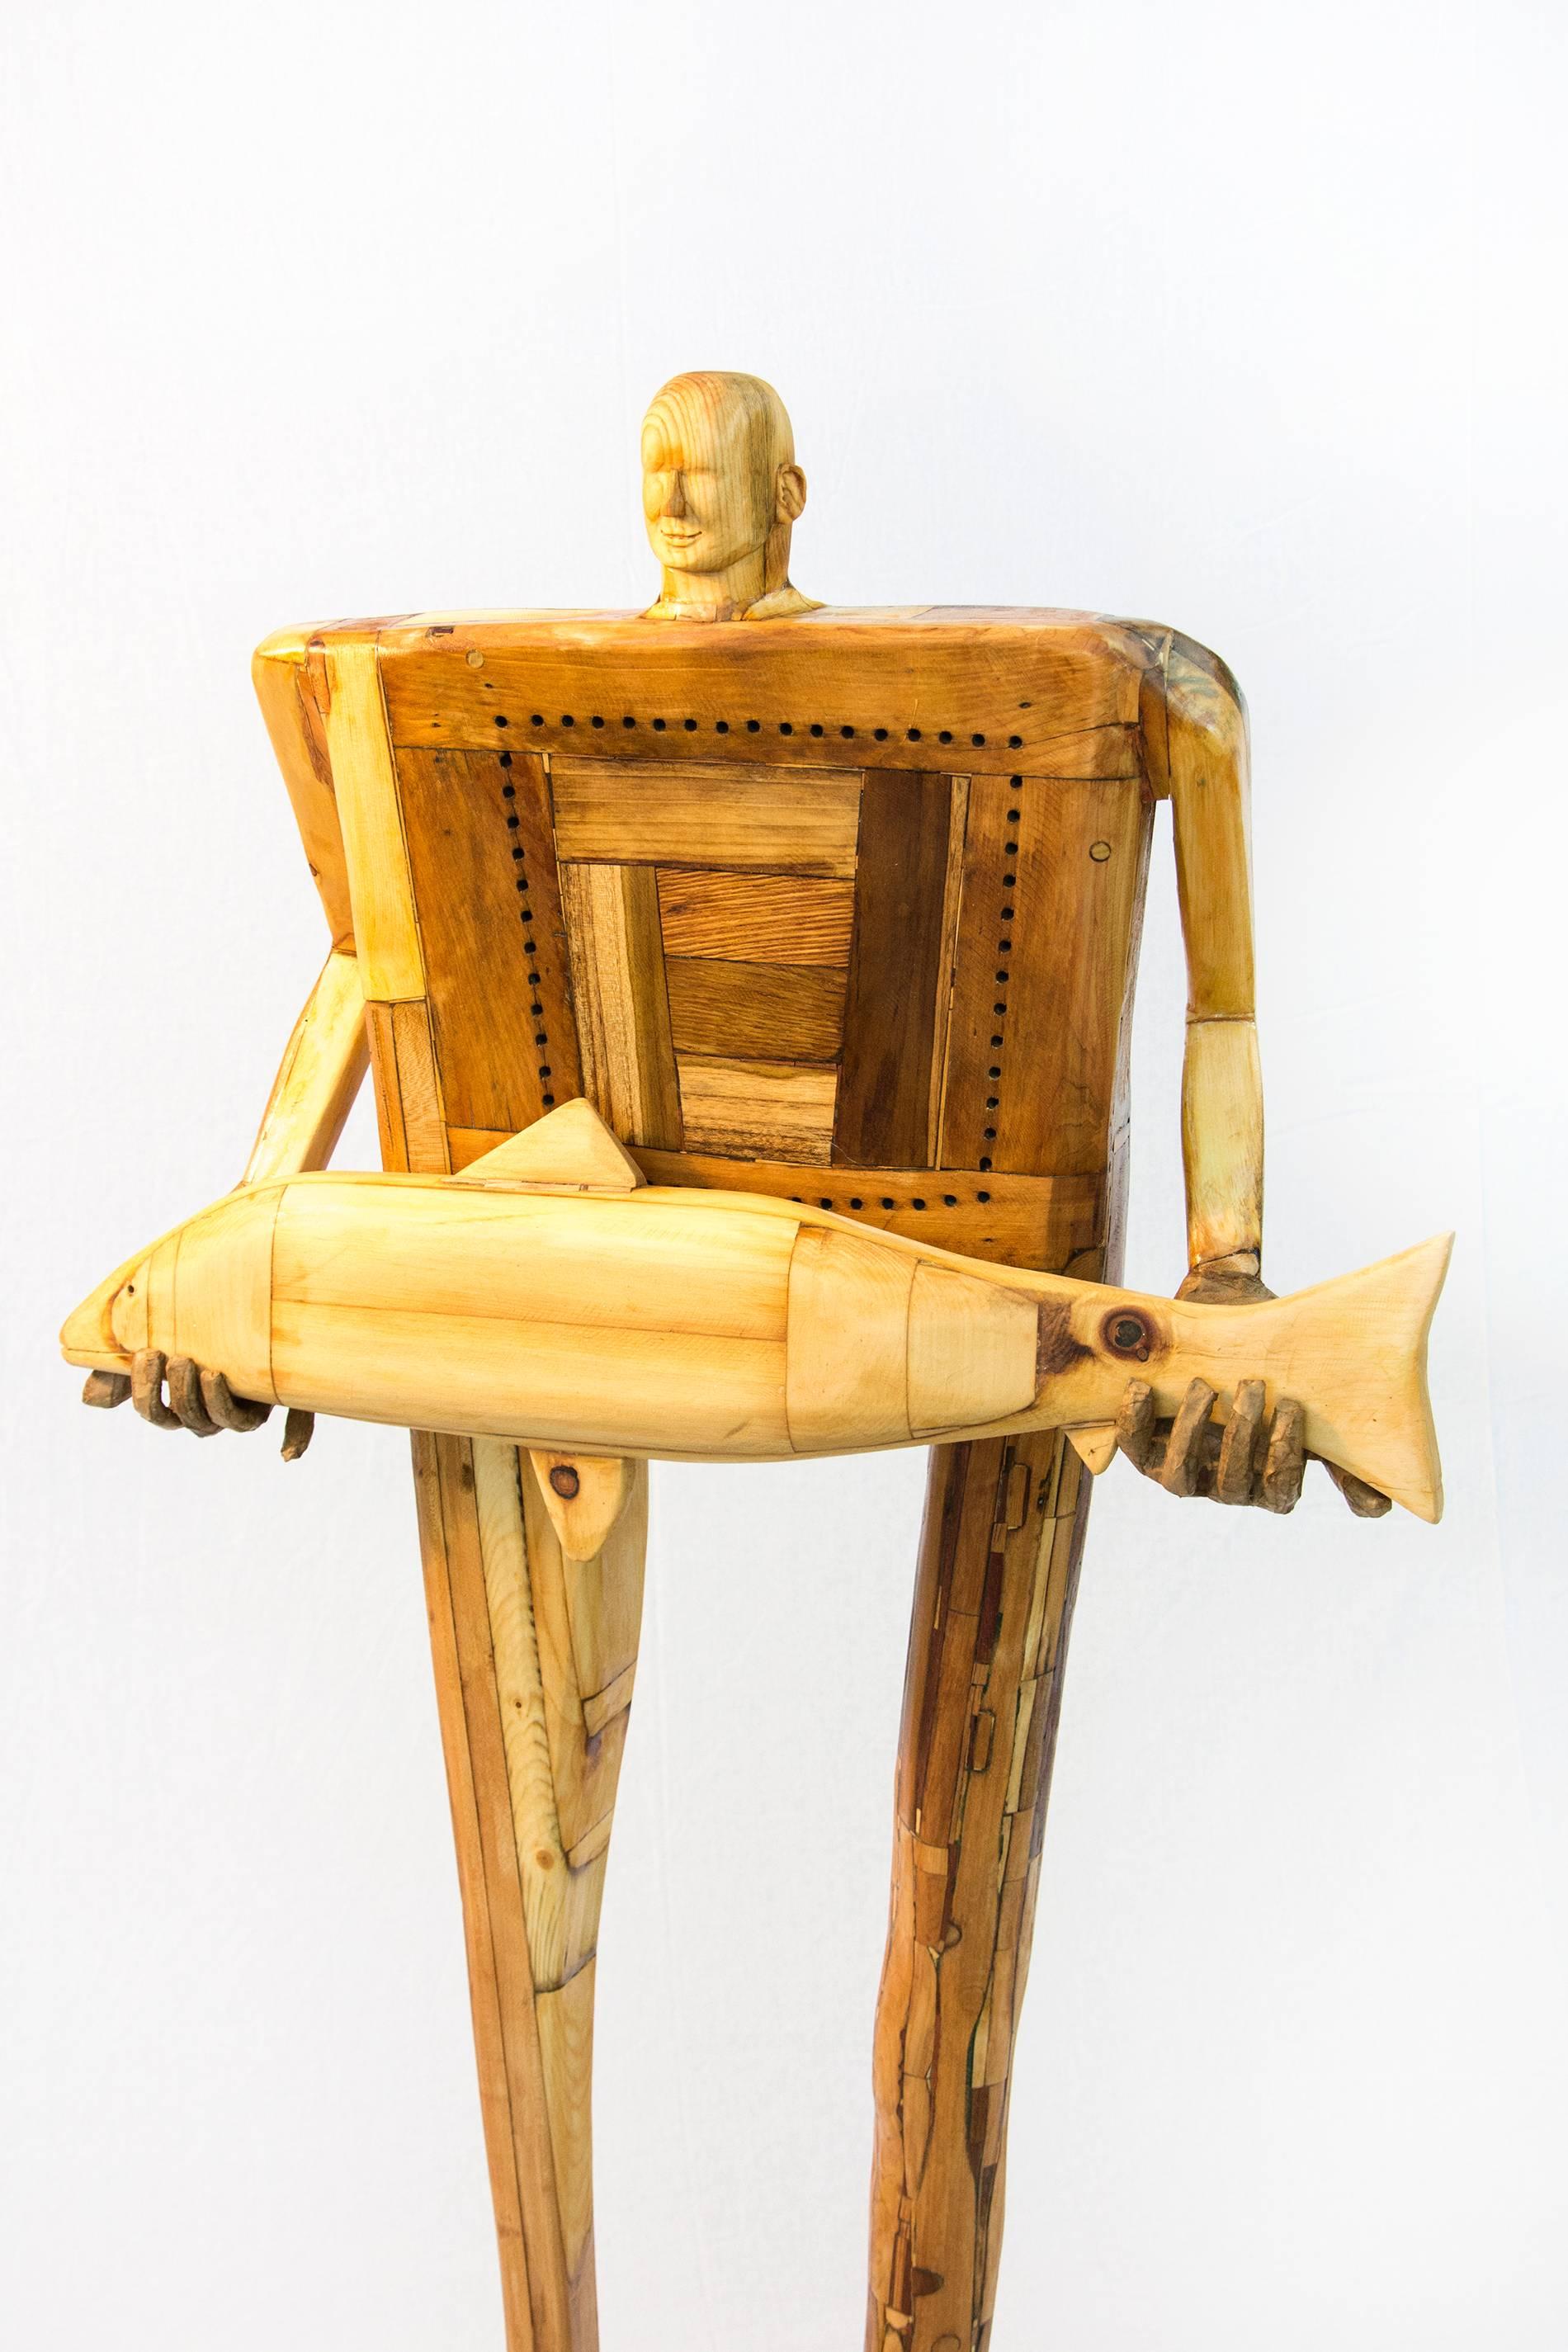 Fishtale - Contemporary Sculpture by Susan Valyi